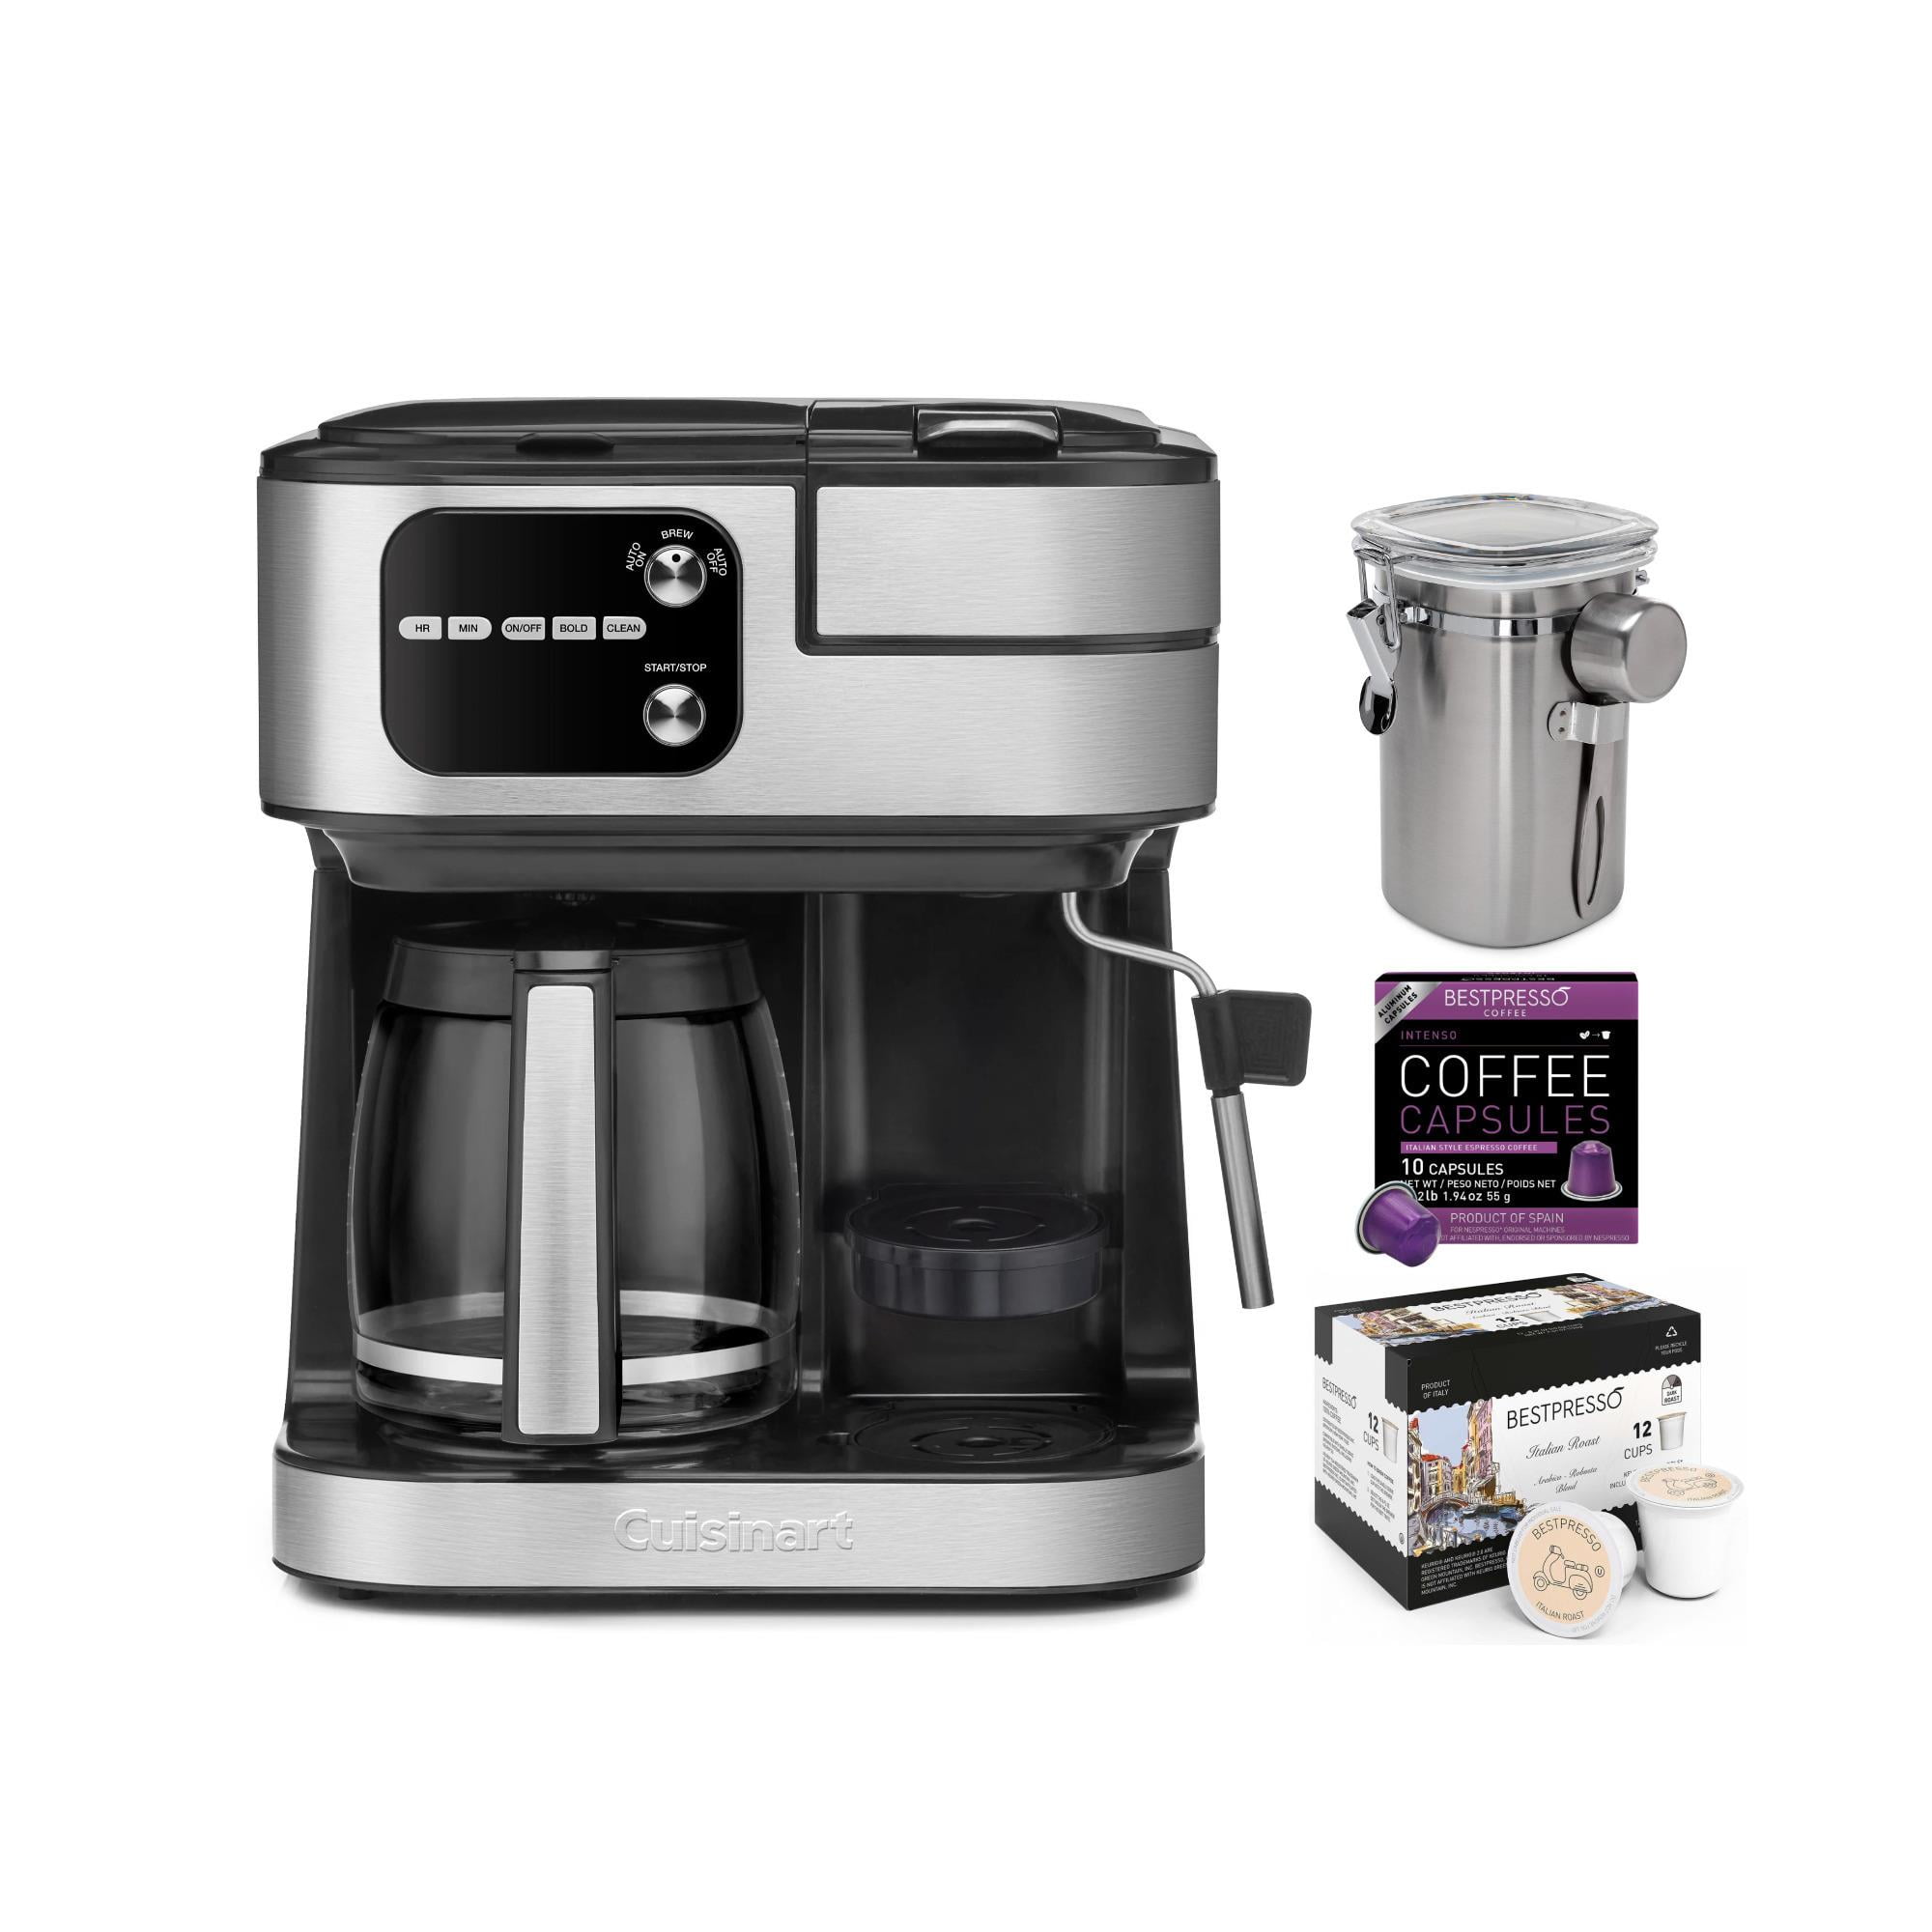  Cuisinart Coffee Maker Barista System, Coffee Center 4-In-1  Coffee Machine, Single-Serve Coffee, Espresso & Nespresso Capsule  Compatible, 12-Cup Carafe, Black, SS-4N1: Home & Kitchen